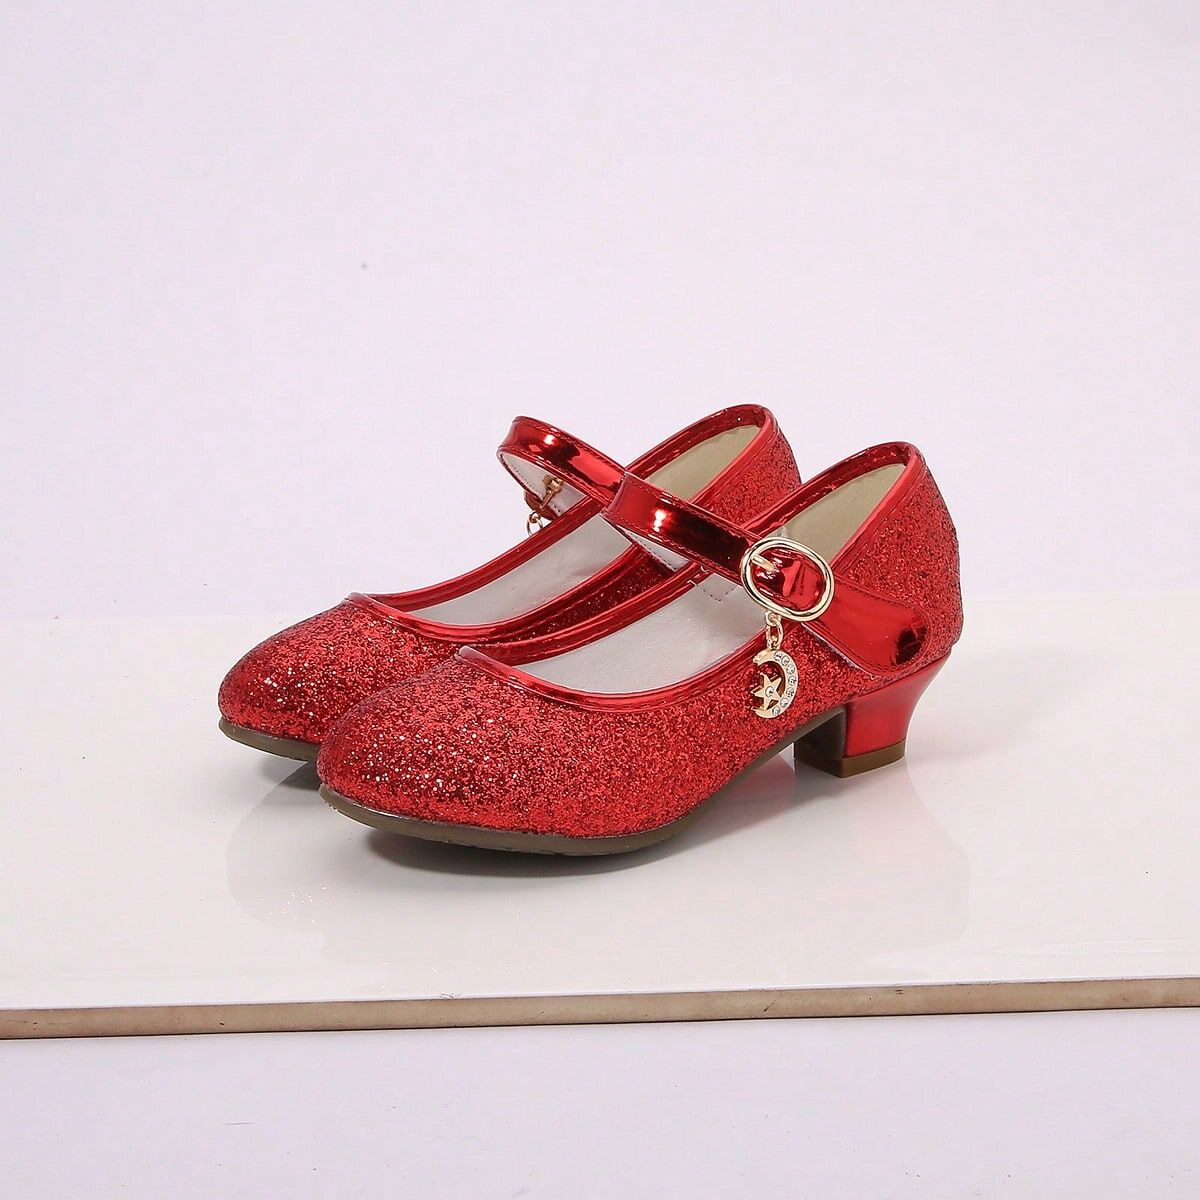 SHEIN Children's Fashionable High Heel Princess Shoes For Girls, Glittering Mary Jane Flat Shoes Red CN34,CN35,CN36,CN37,CN38,CN27,CN28,CN29,CN30,CN31,CN32,CN33